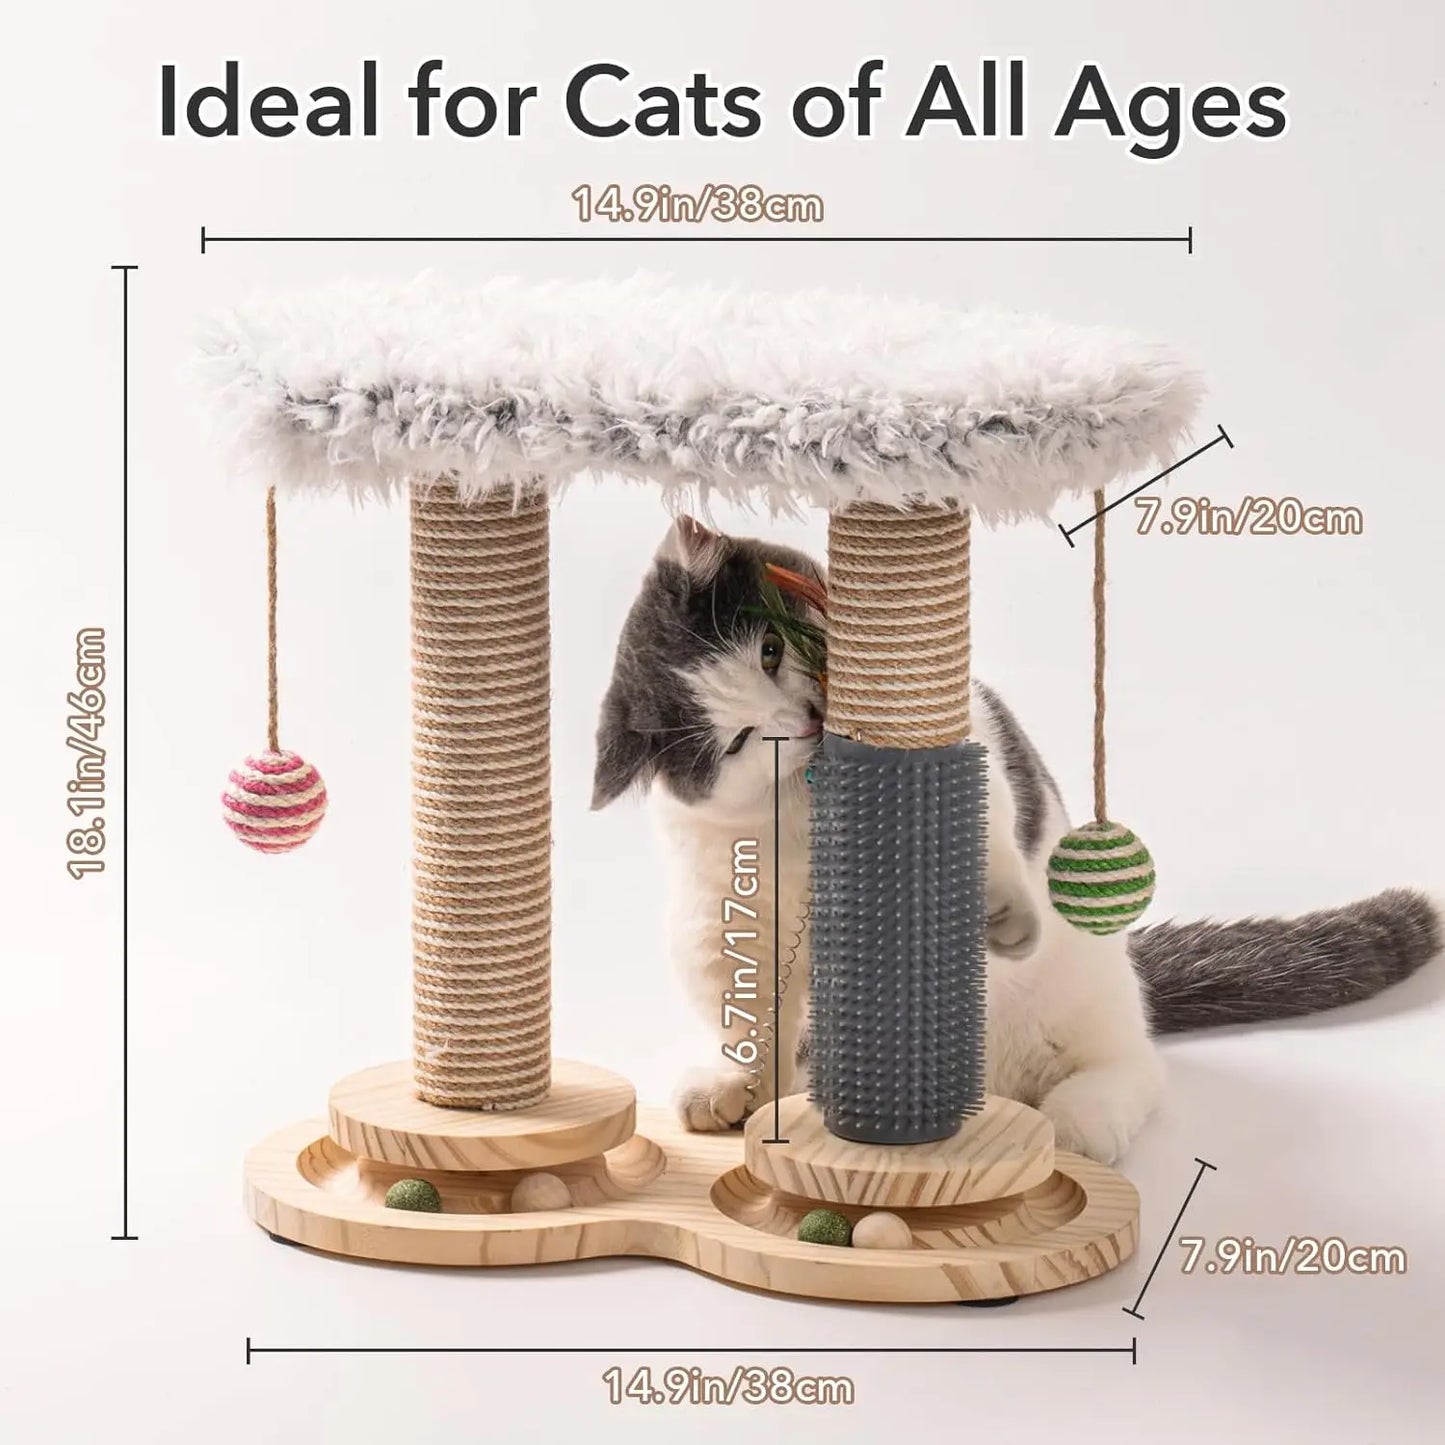 Cat Scratching Post for Indoor Soft Rabbit Fleece Perch for Rest Natural Sisal Scratcher Interactive Kitten Toy Balls